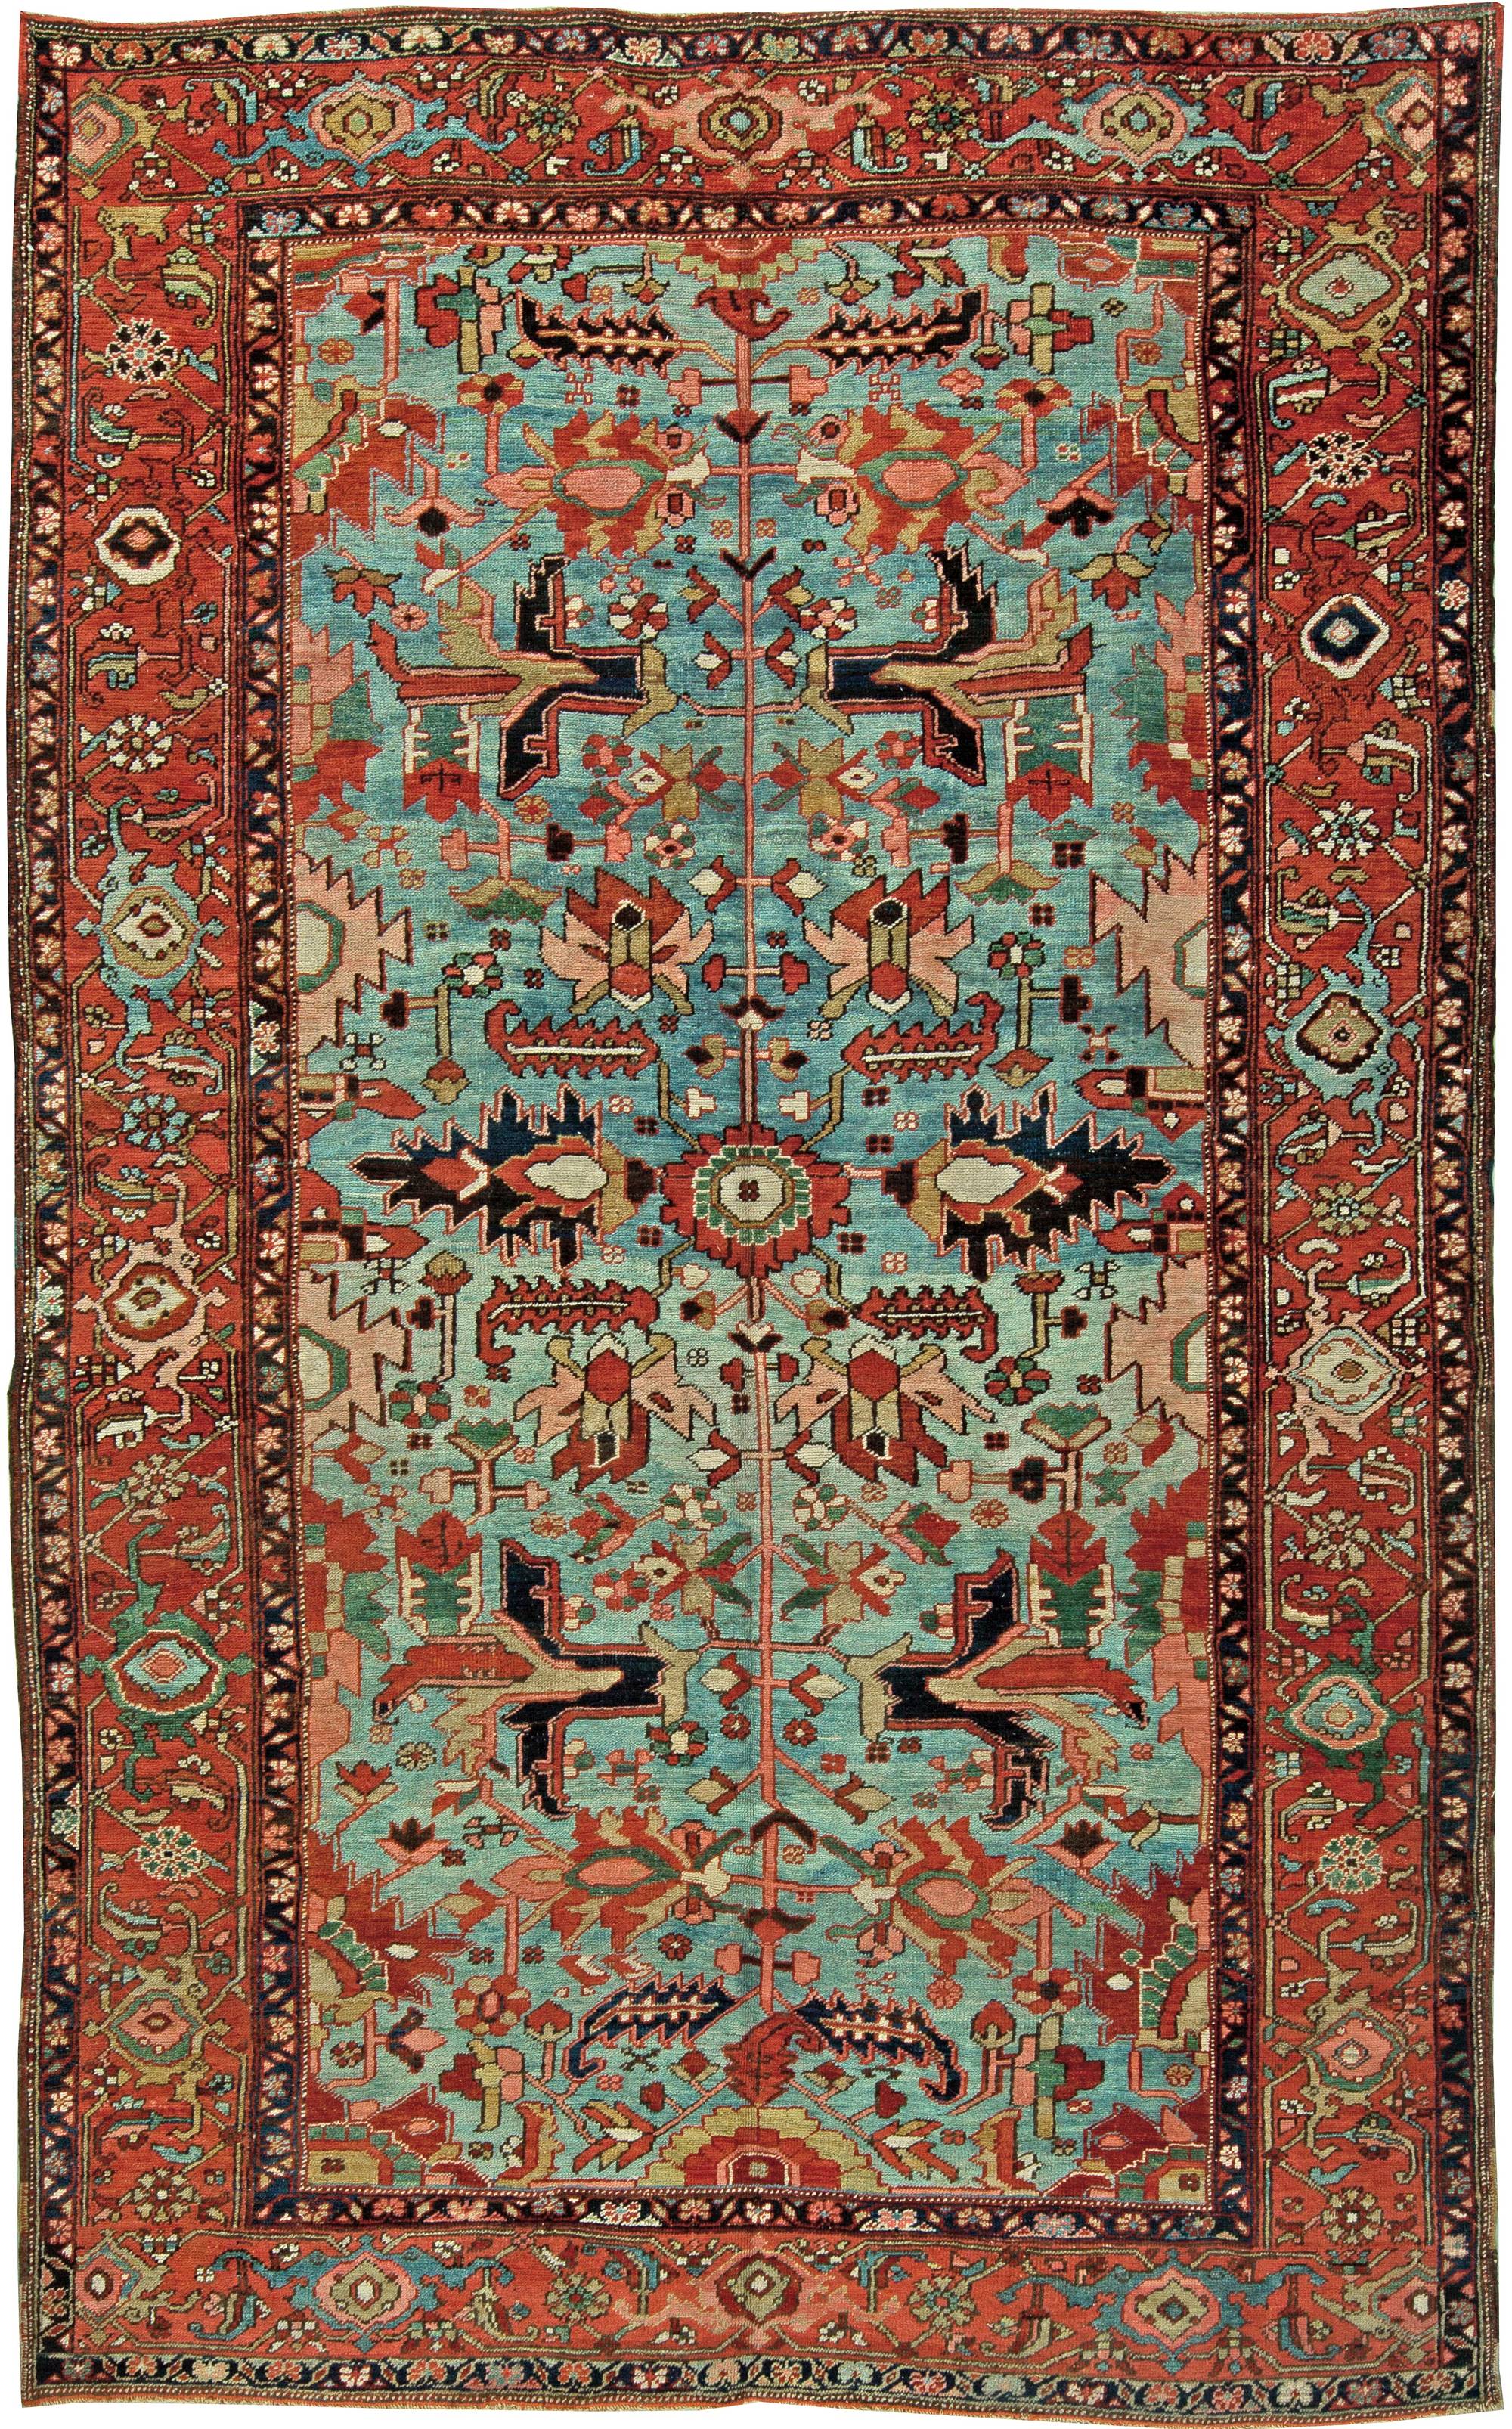 Used Persian Rugs